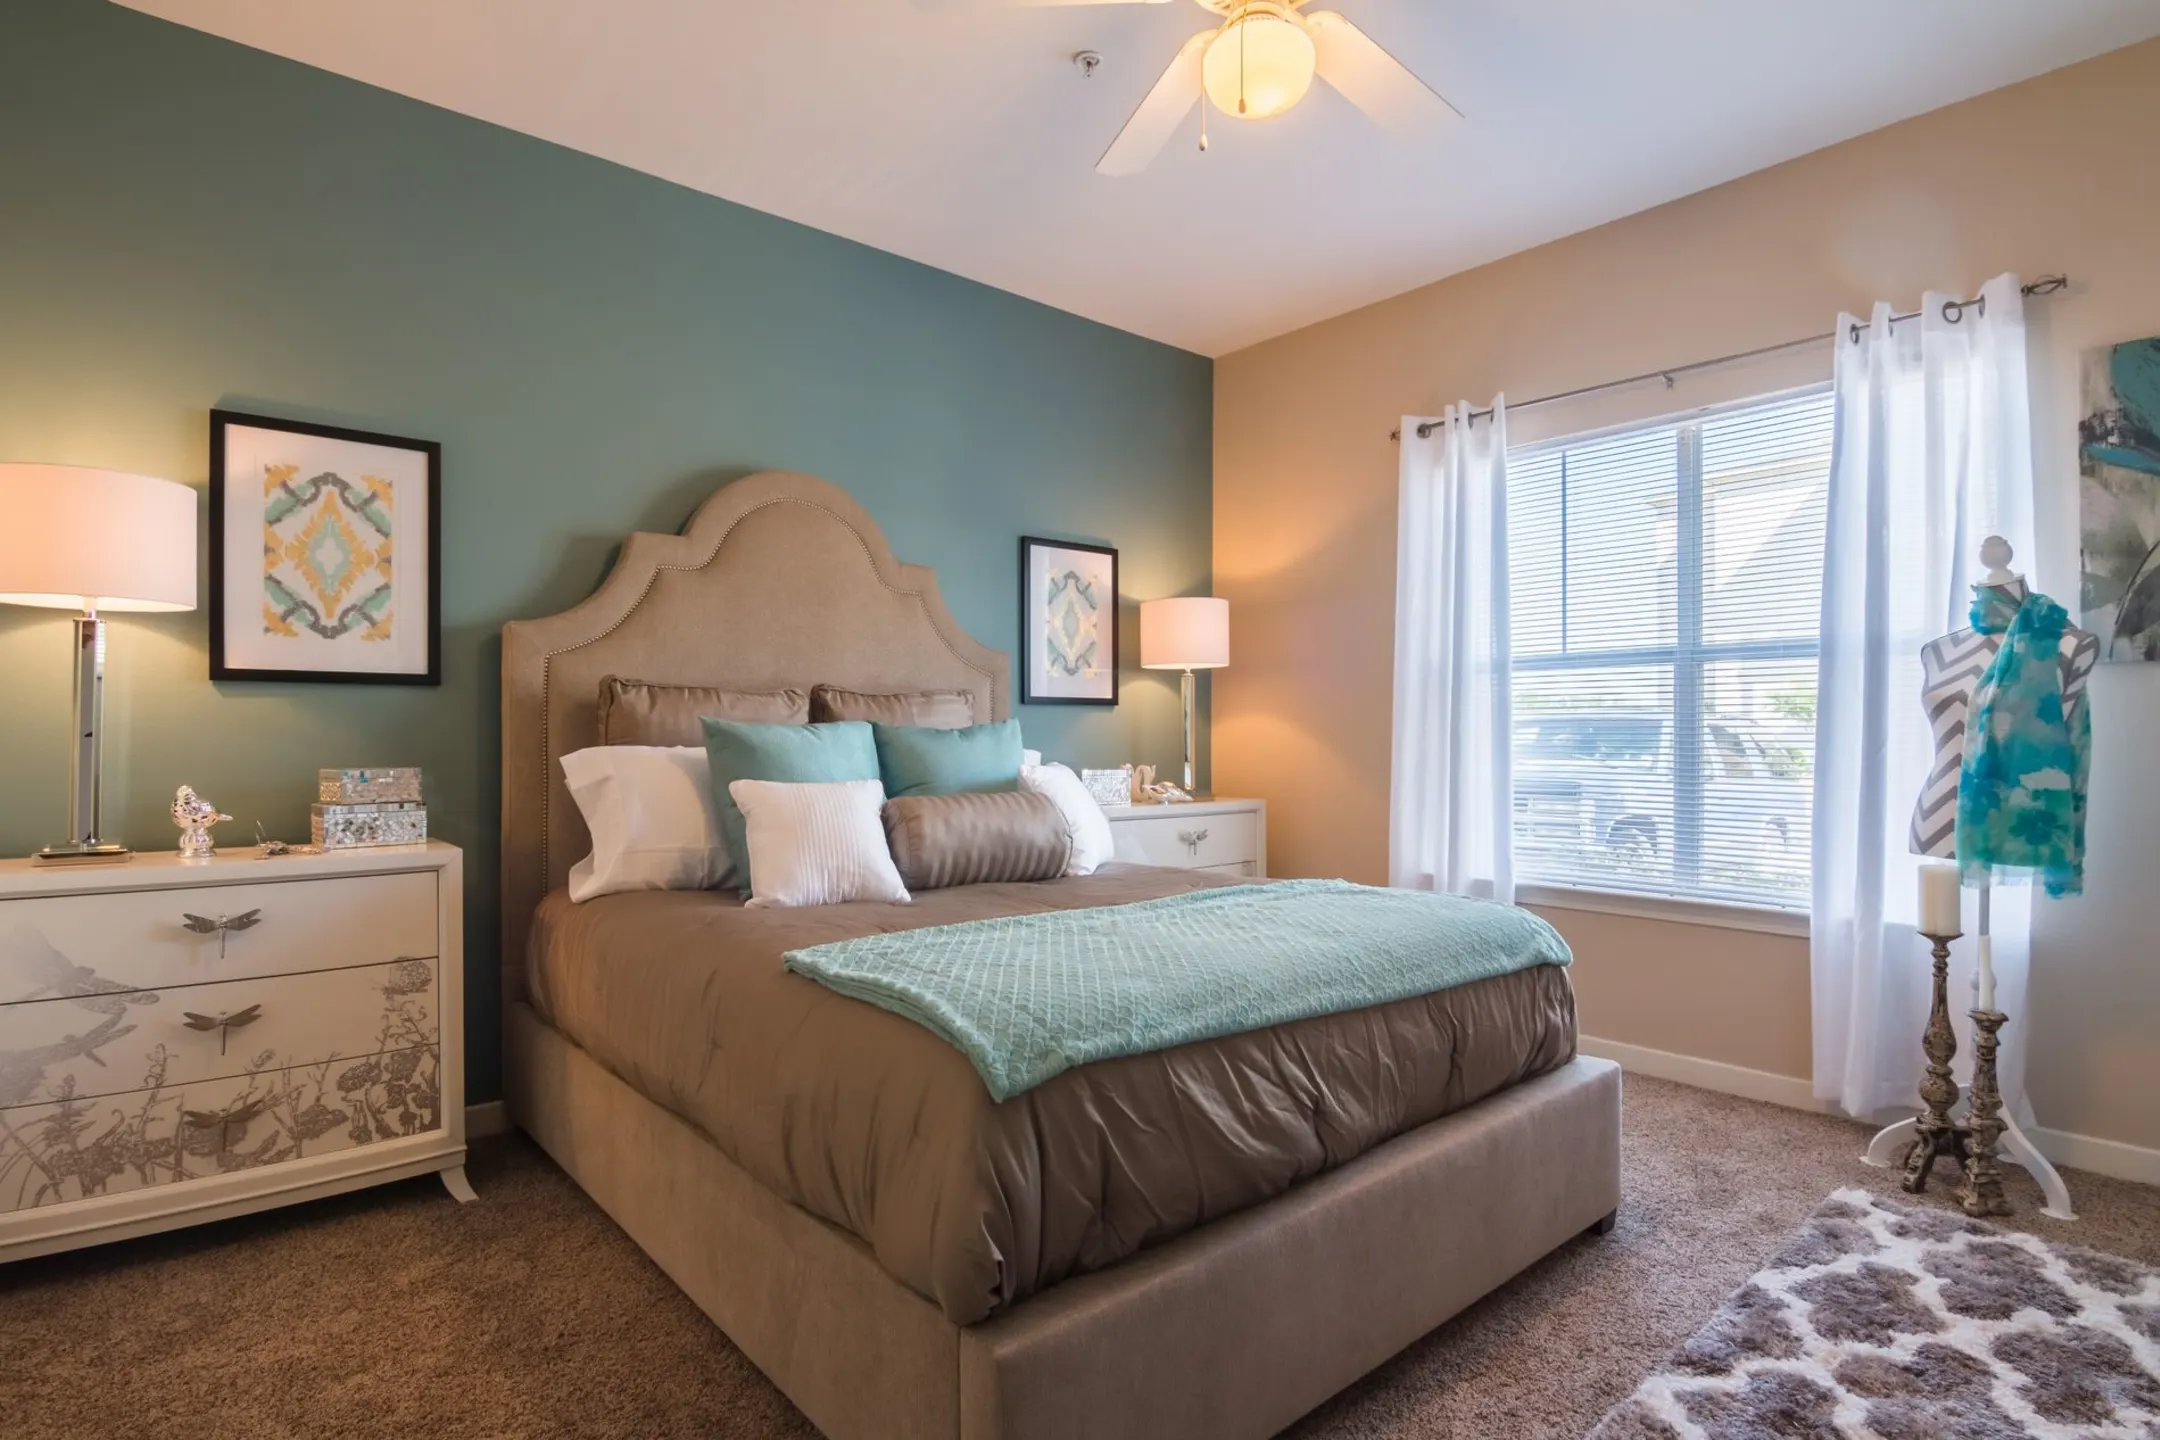 Bedroom - Ultris-Island Park Apartments - Shreveport, LA